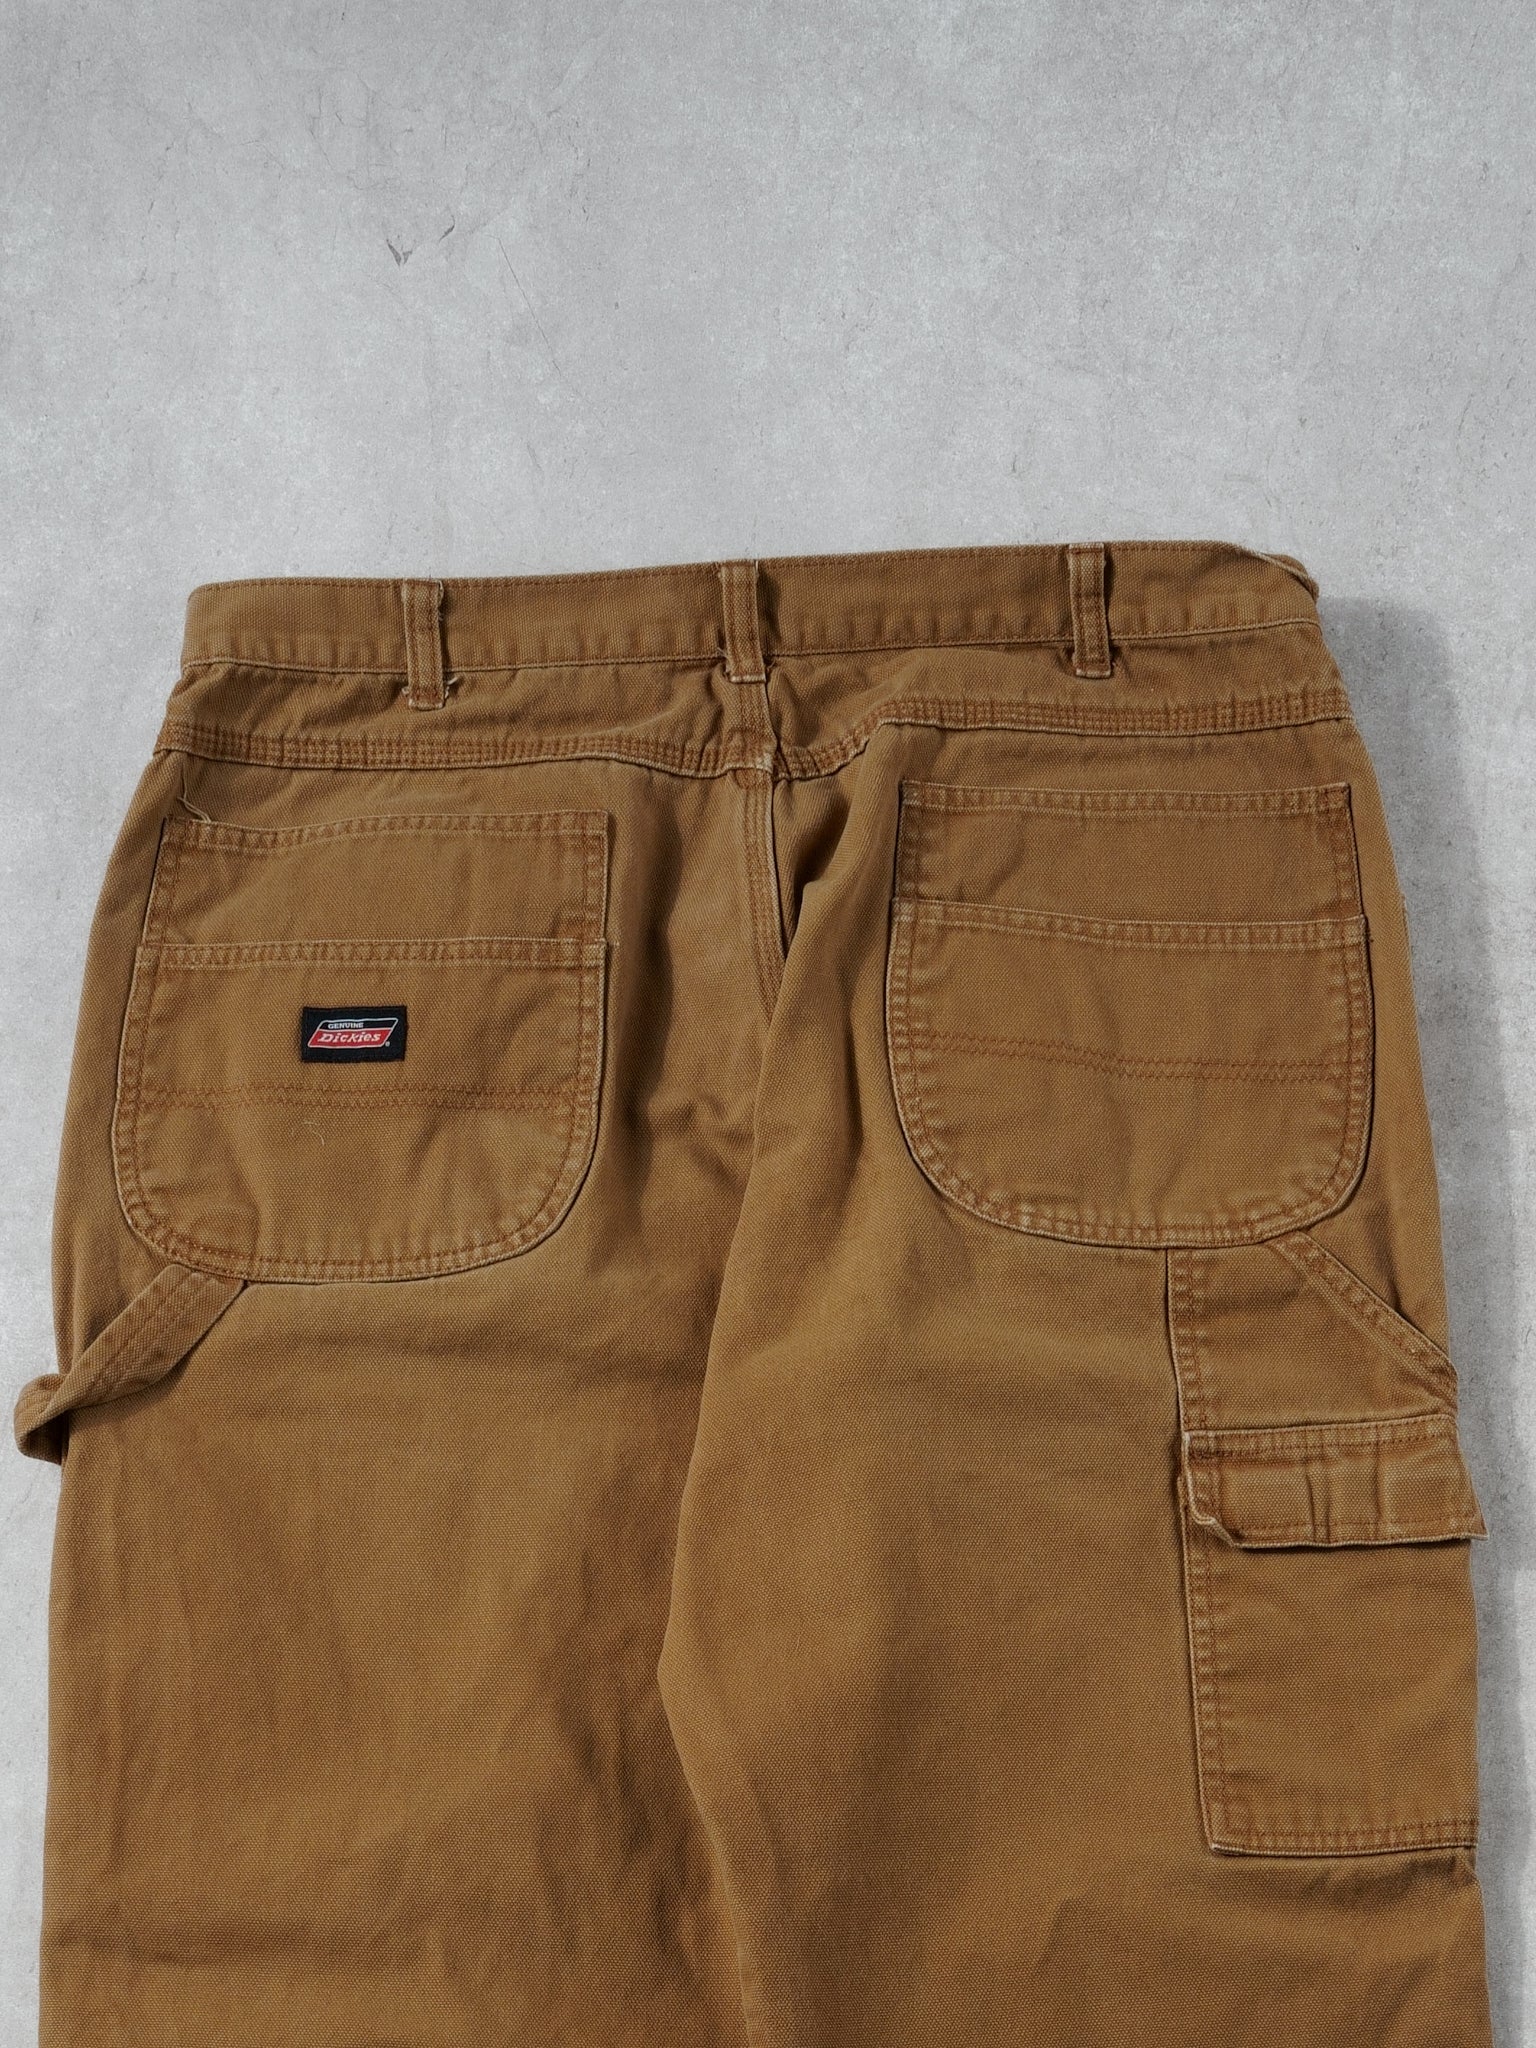 Vintage 90s Khaki Dickies Double Knee Carpenter Pants (34x30)